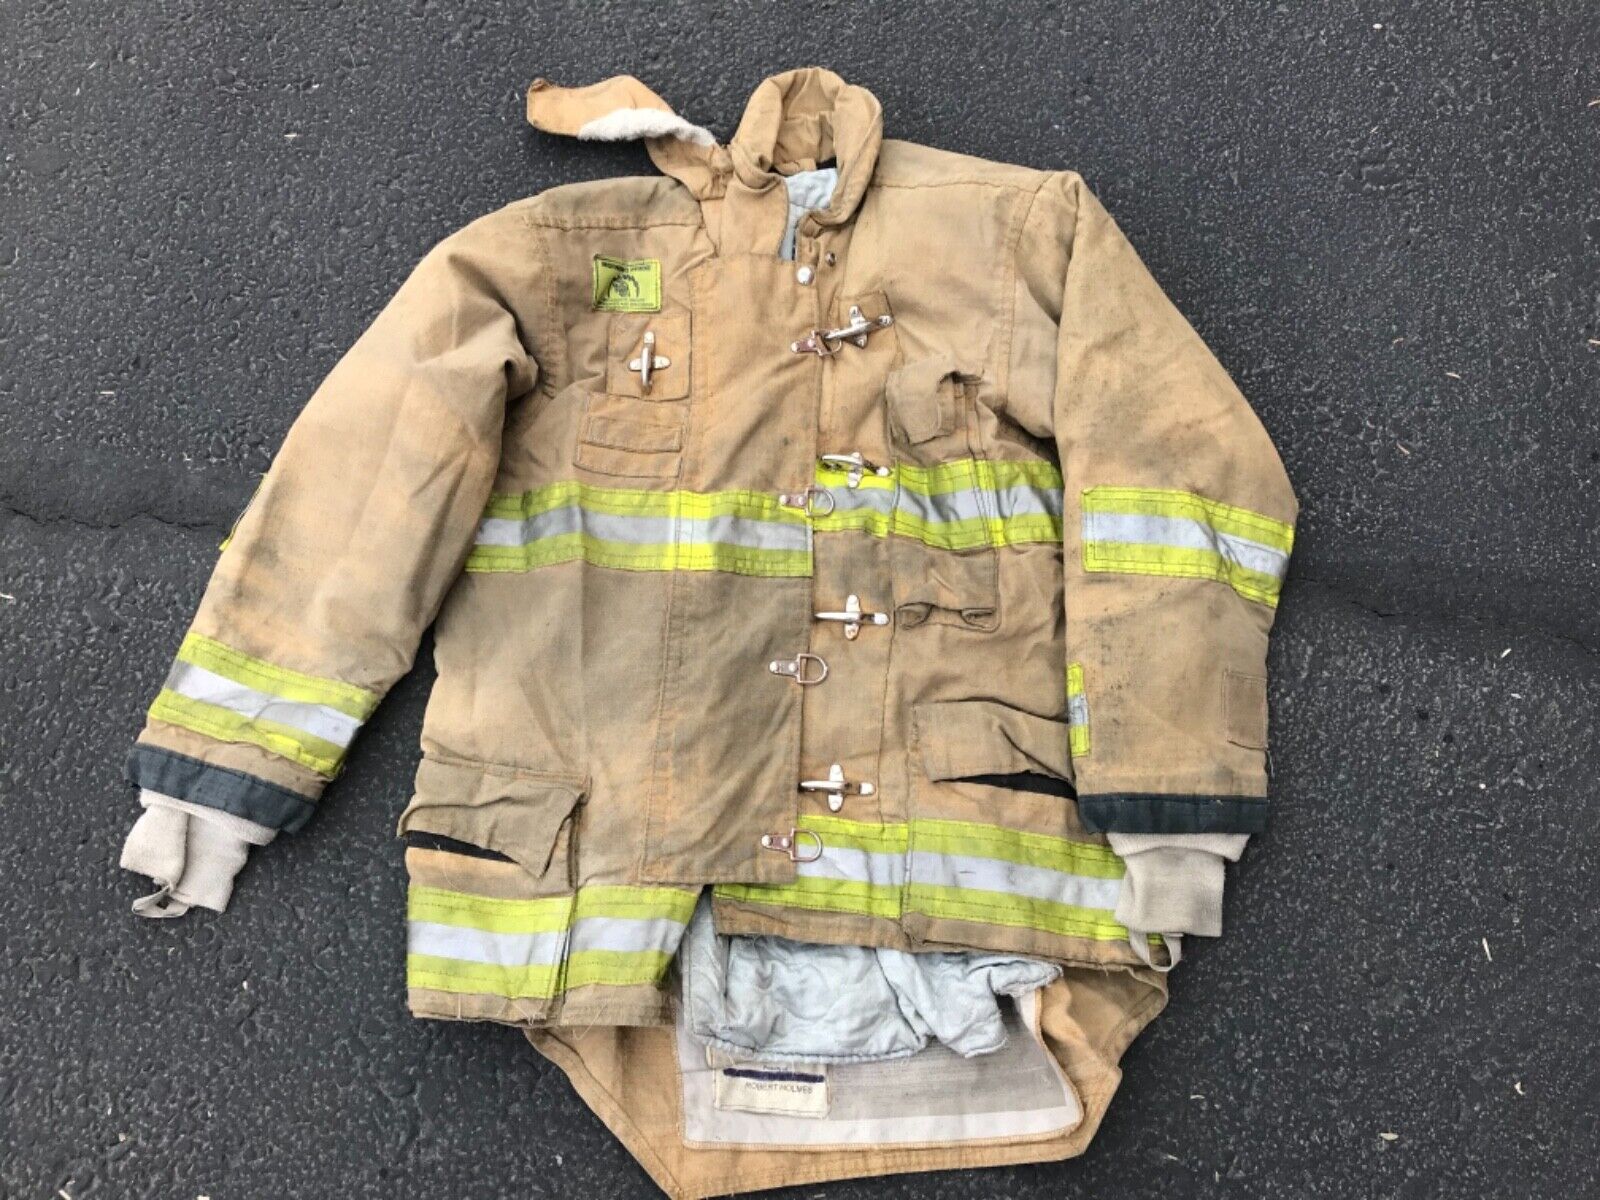 Morning Pride Firefighter Fireman Jacket Turnout Bunker Gear 44 x 37 2002 #29